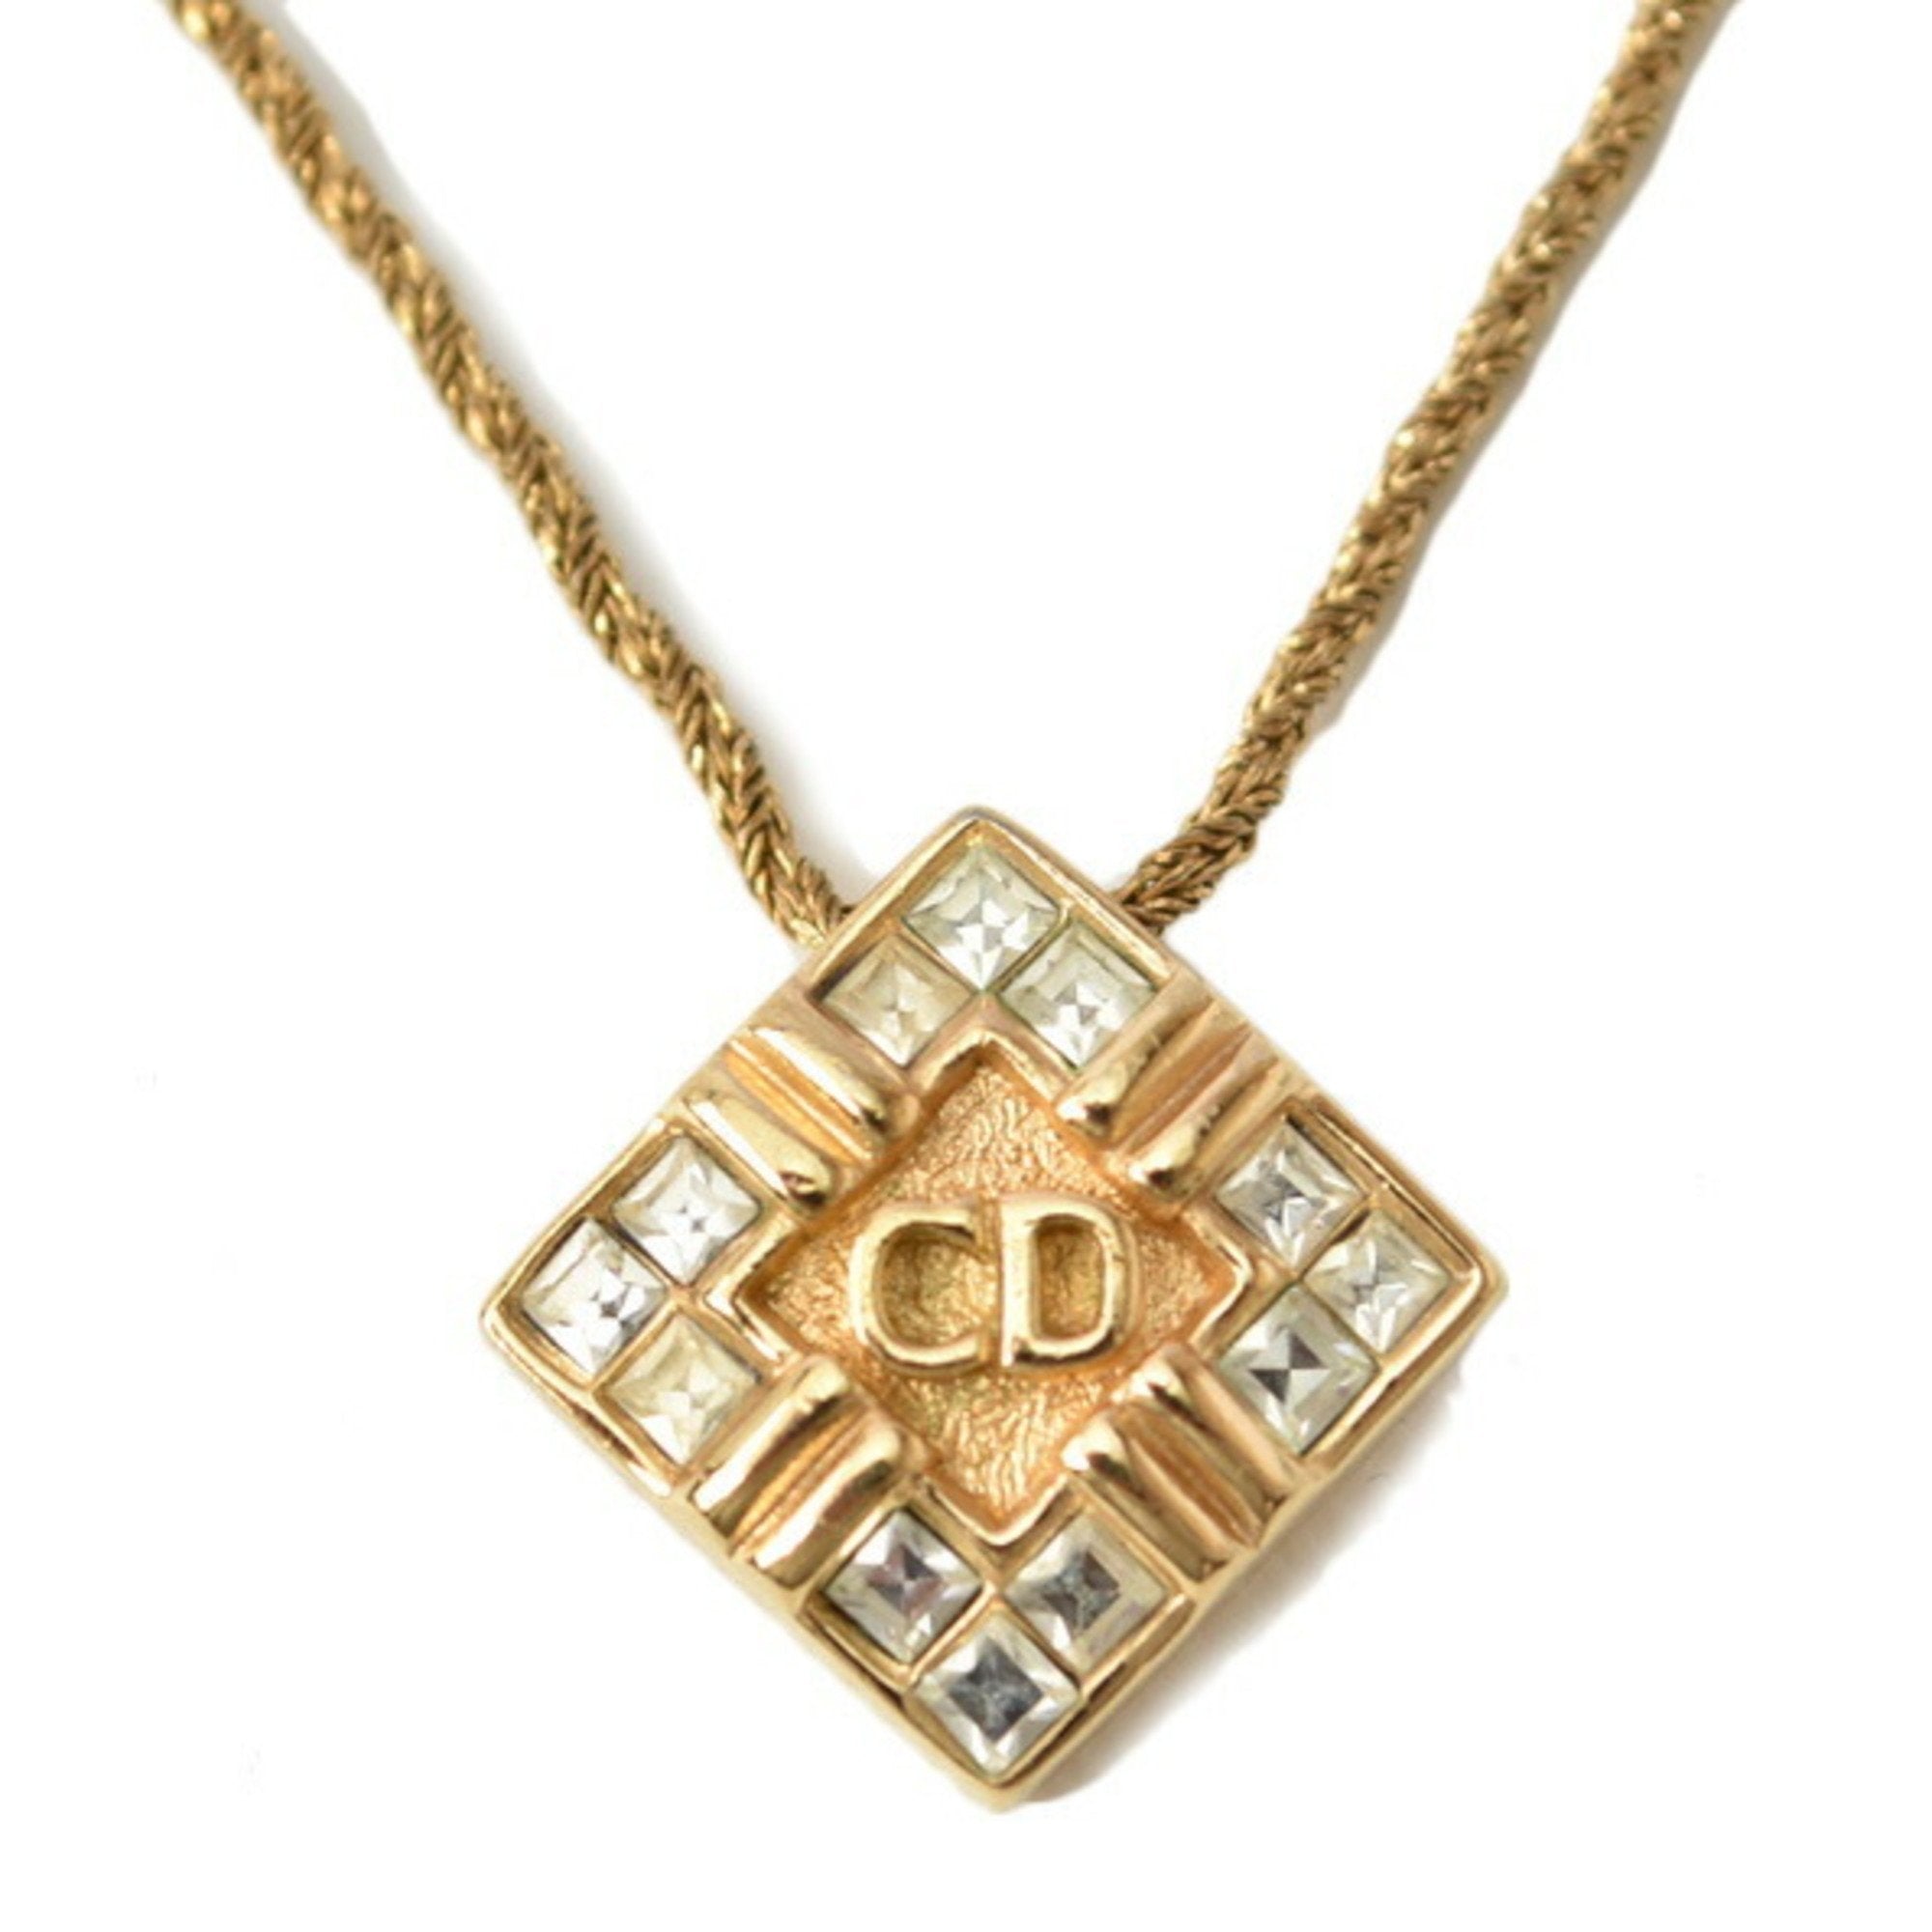 Chi tiết 67 về cd dior necklace gold mới nhất  cdgdbentreeduvn